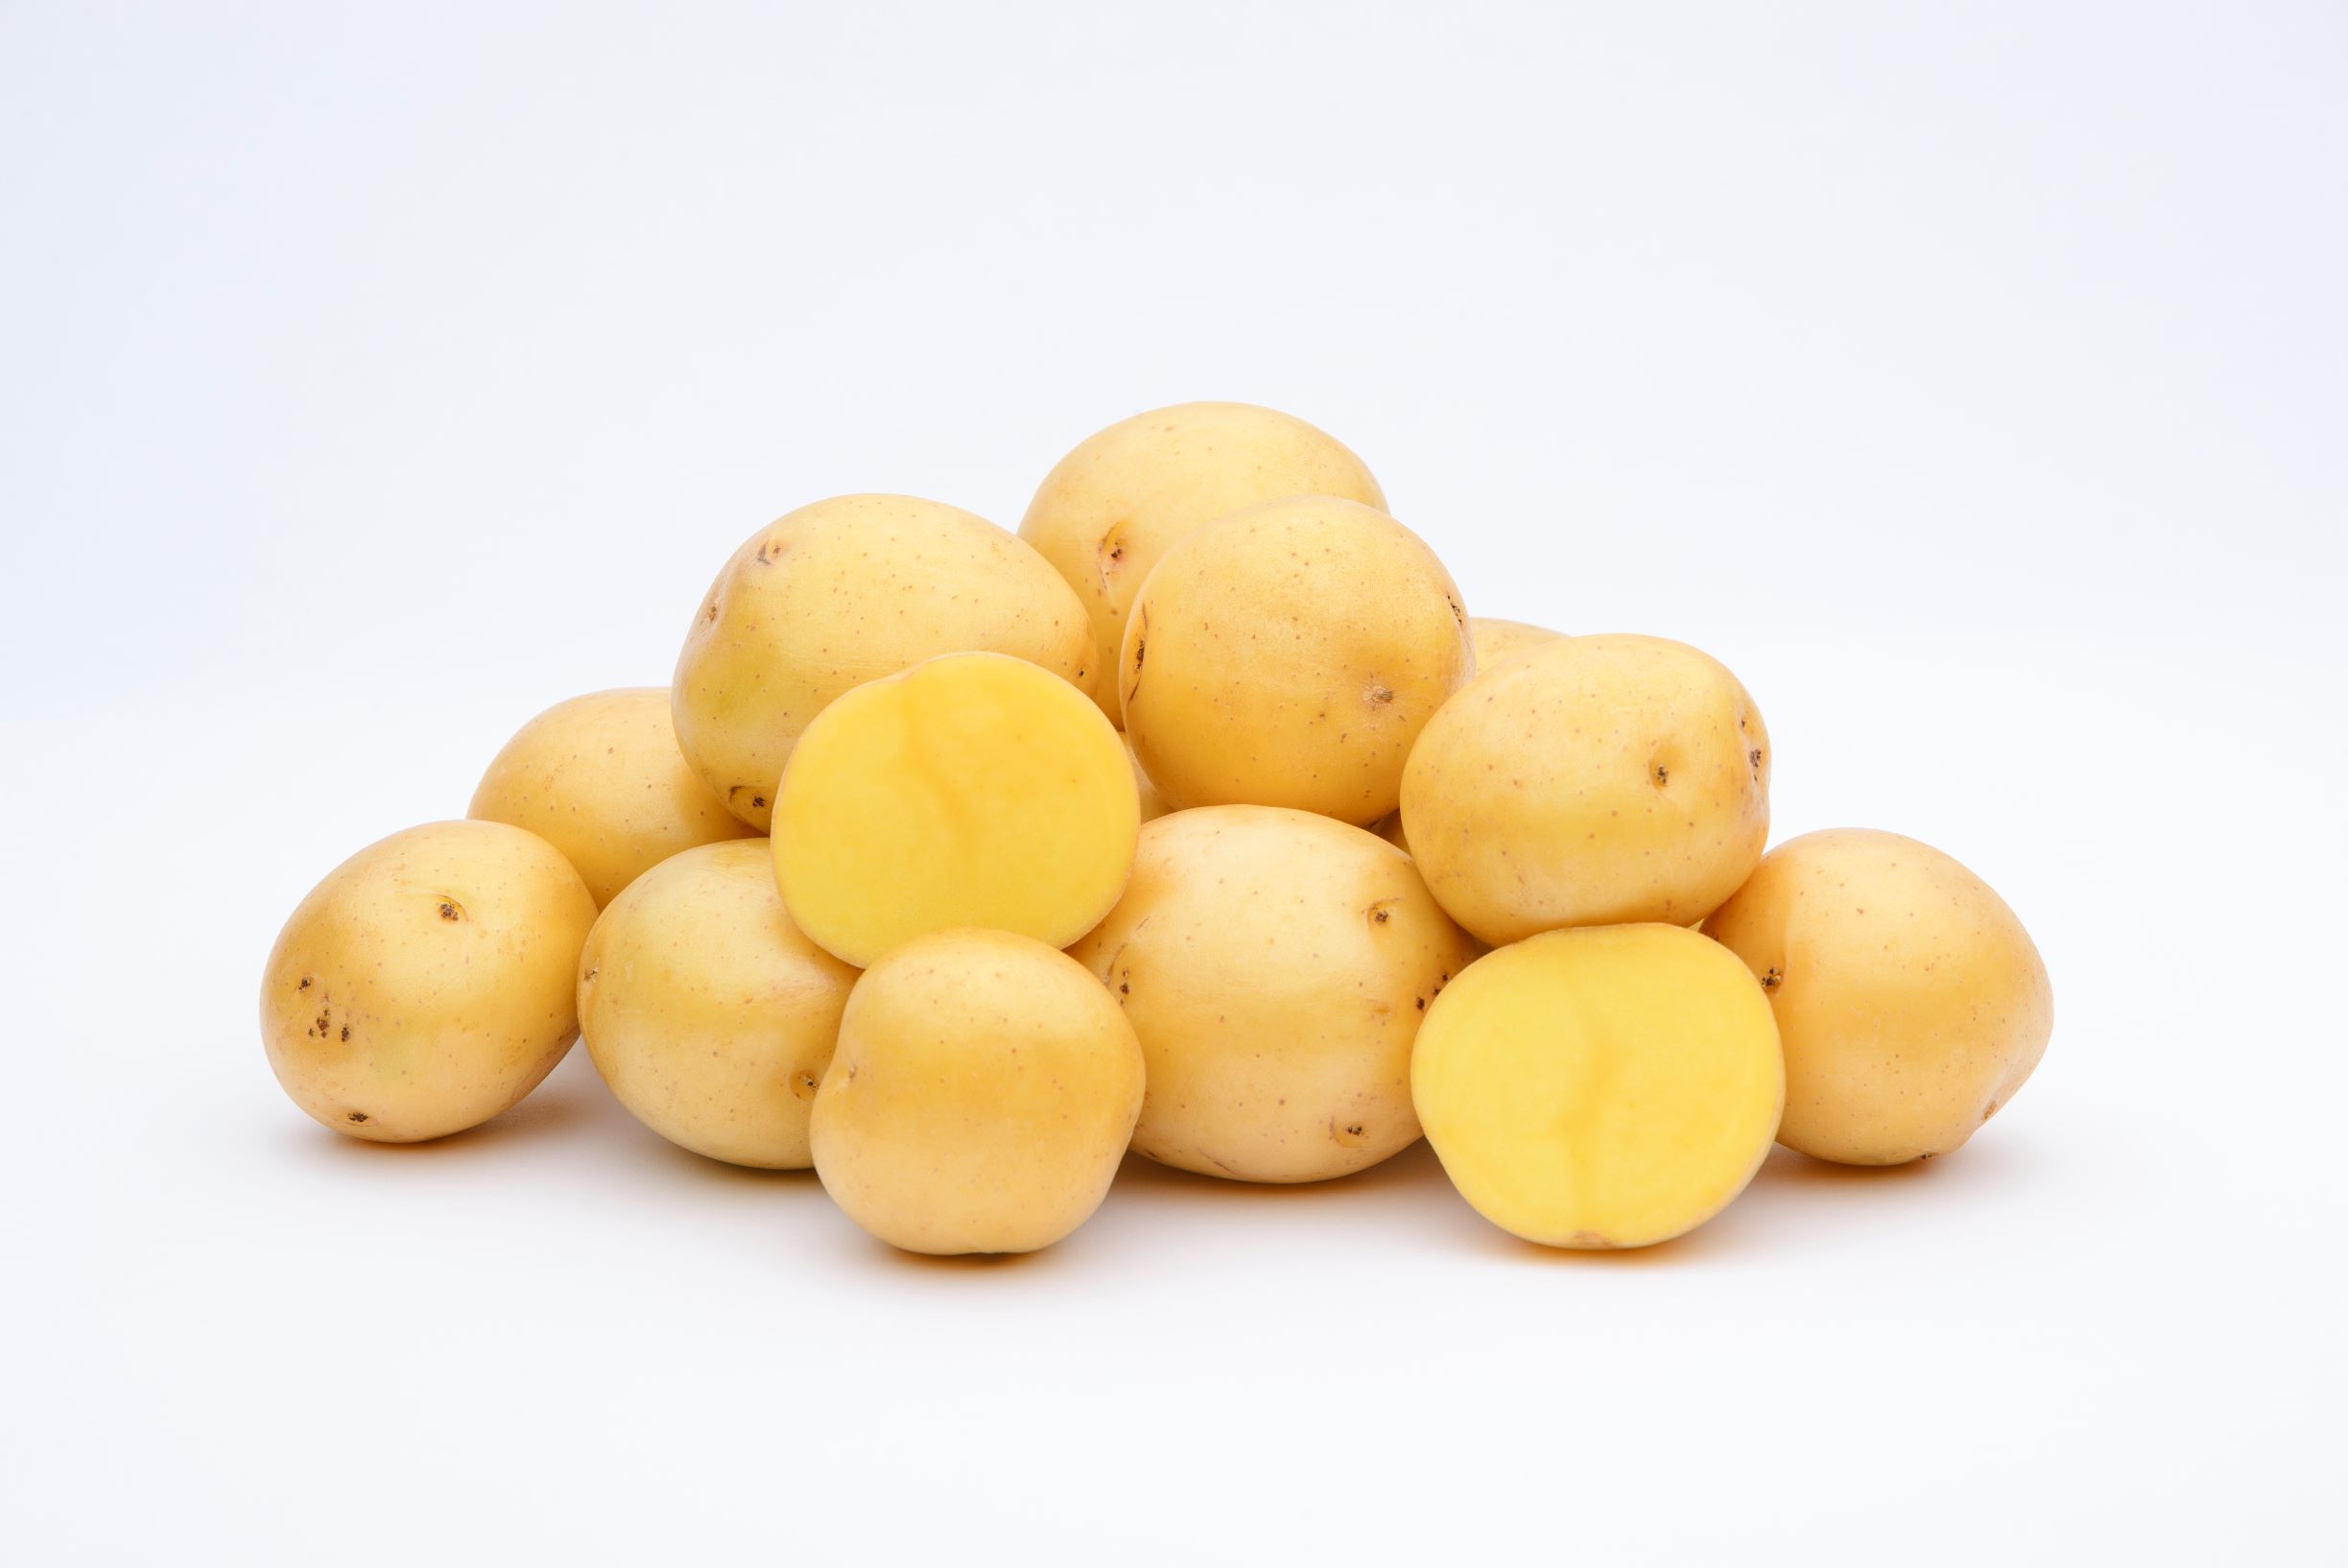 How To Store Yellow Potatoes